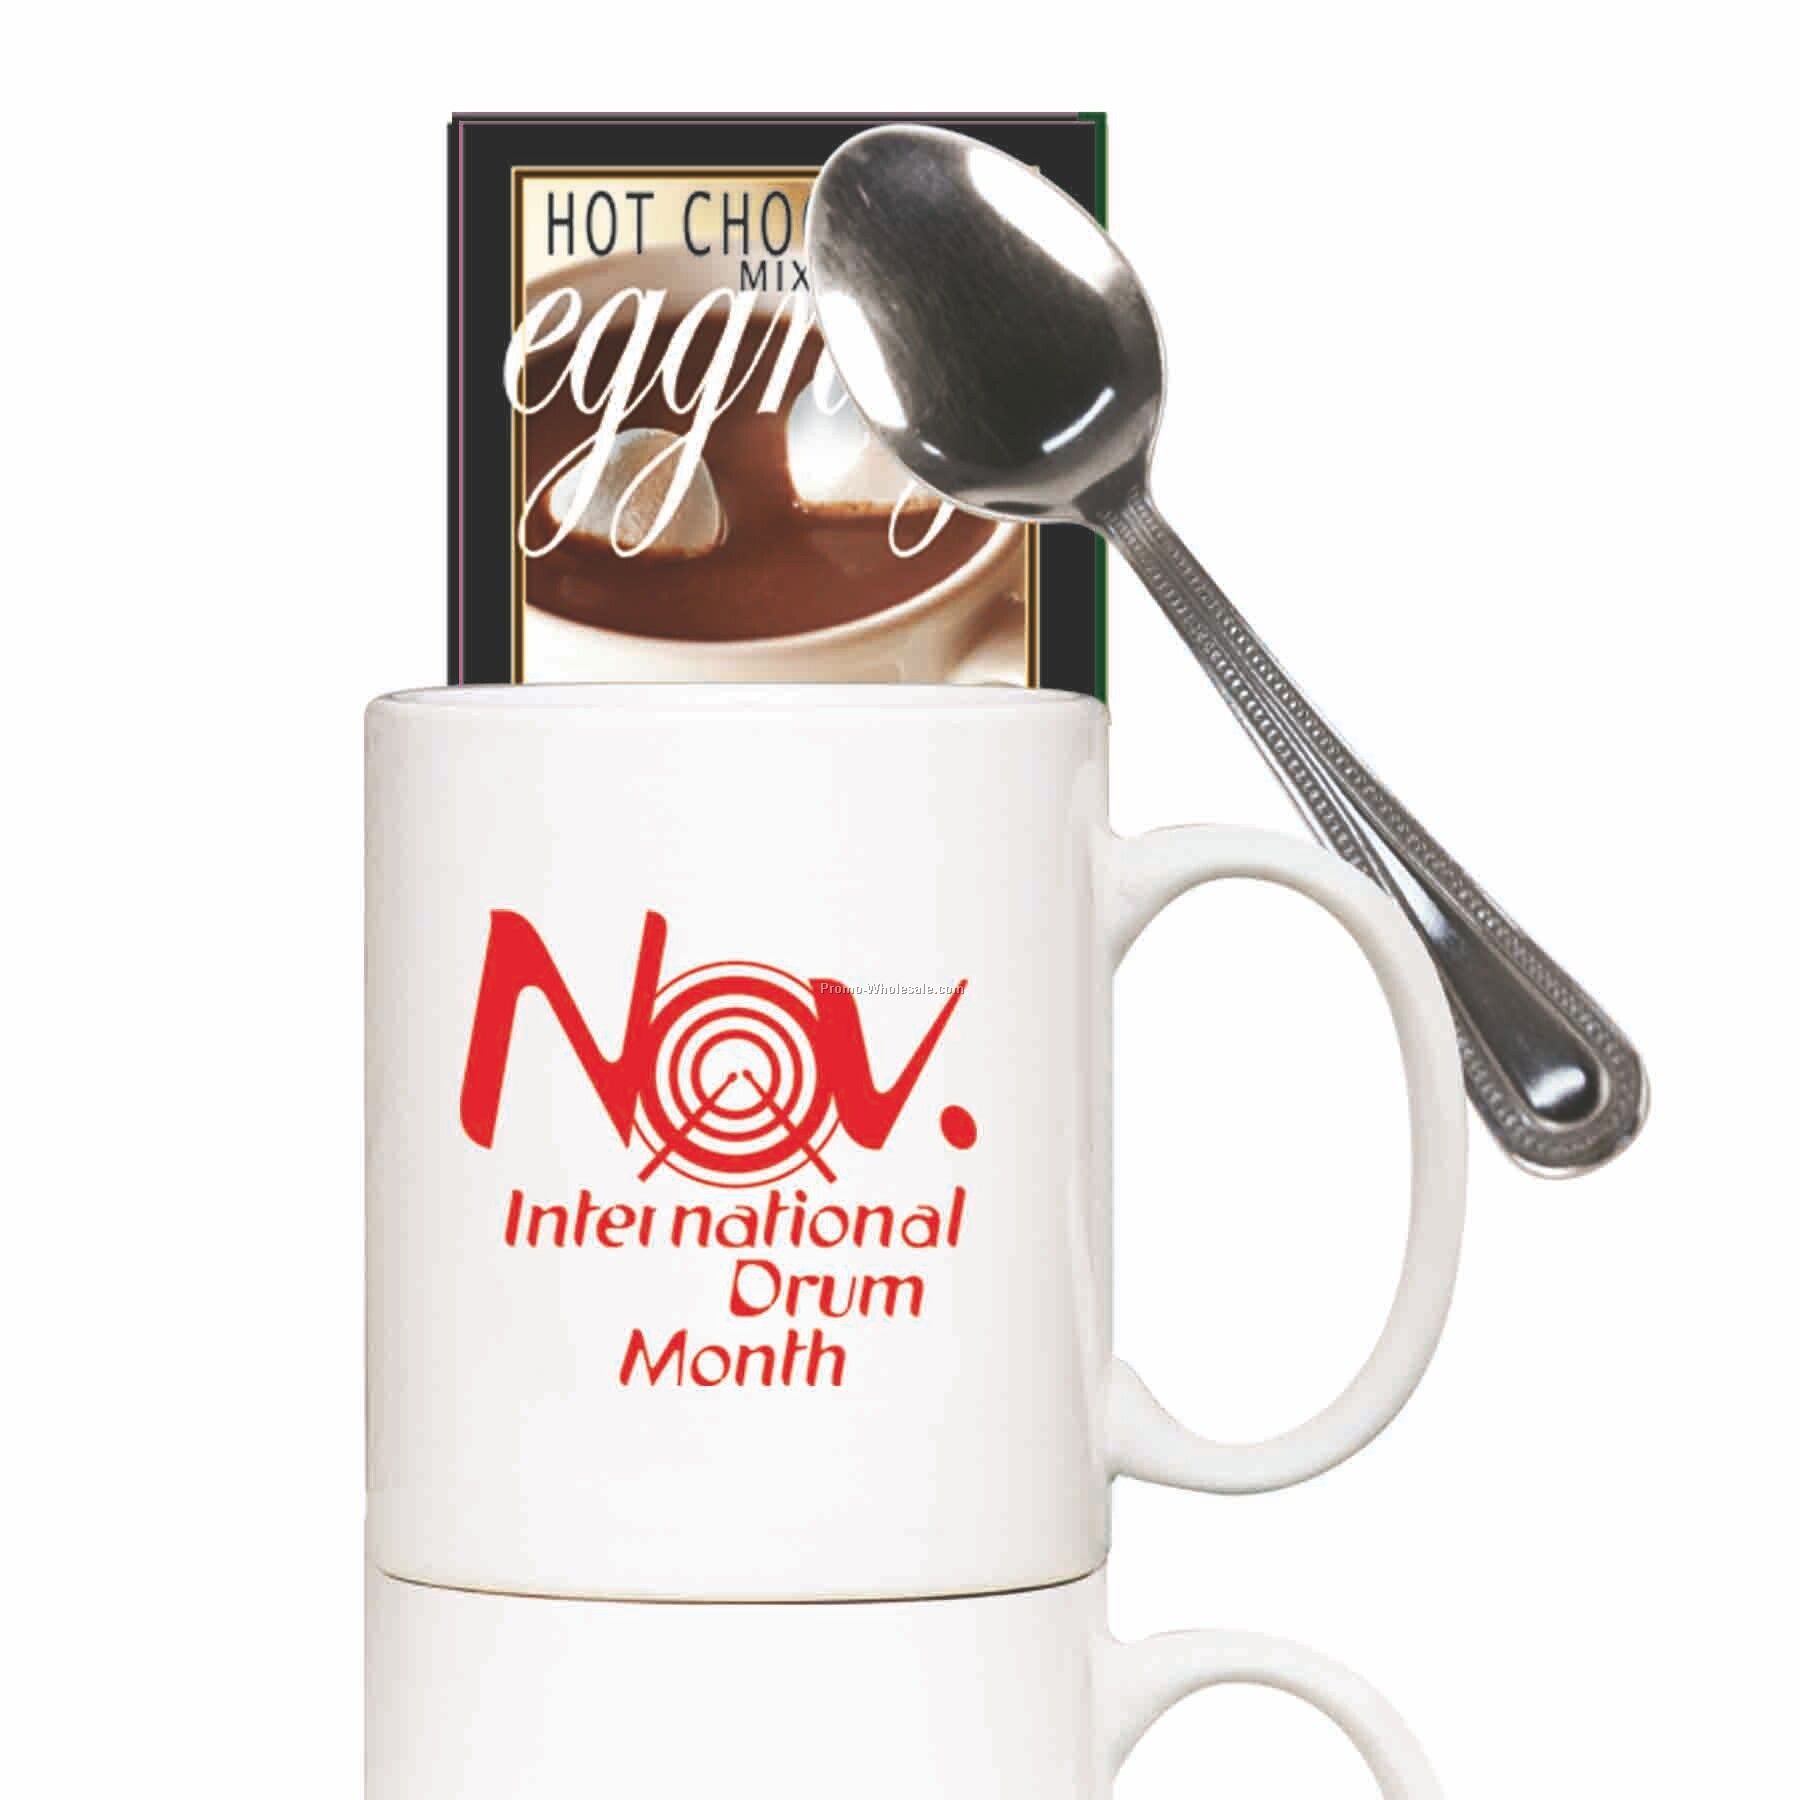 Hot Chocolate For 1 Gourmet Gift Set (Eggnog)